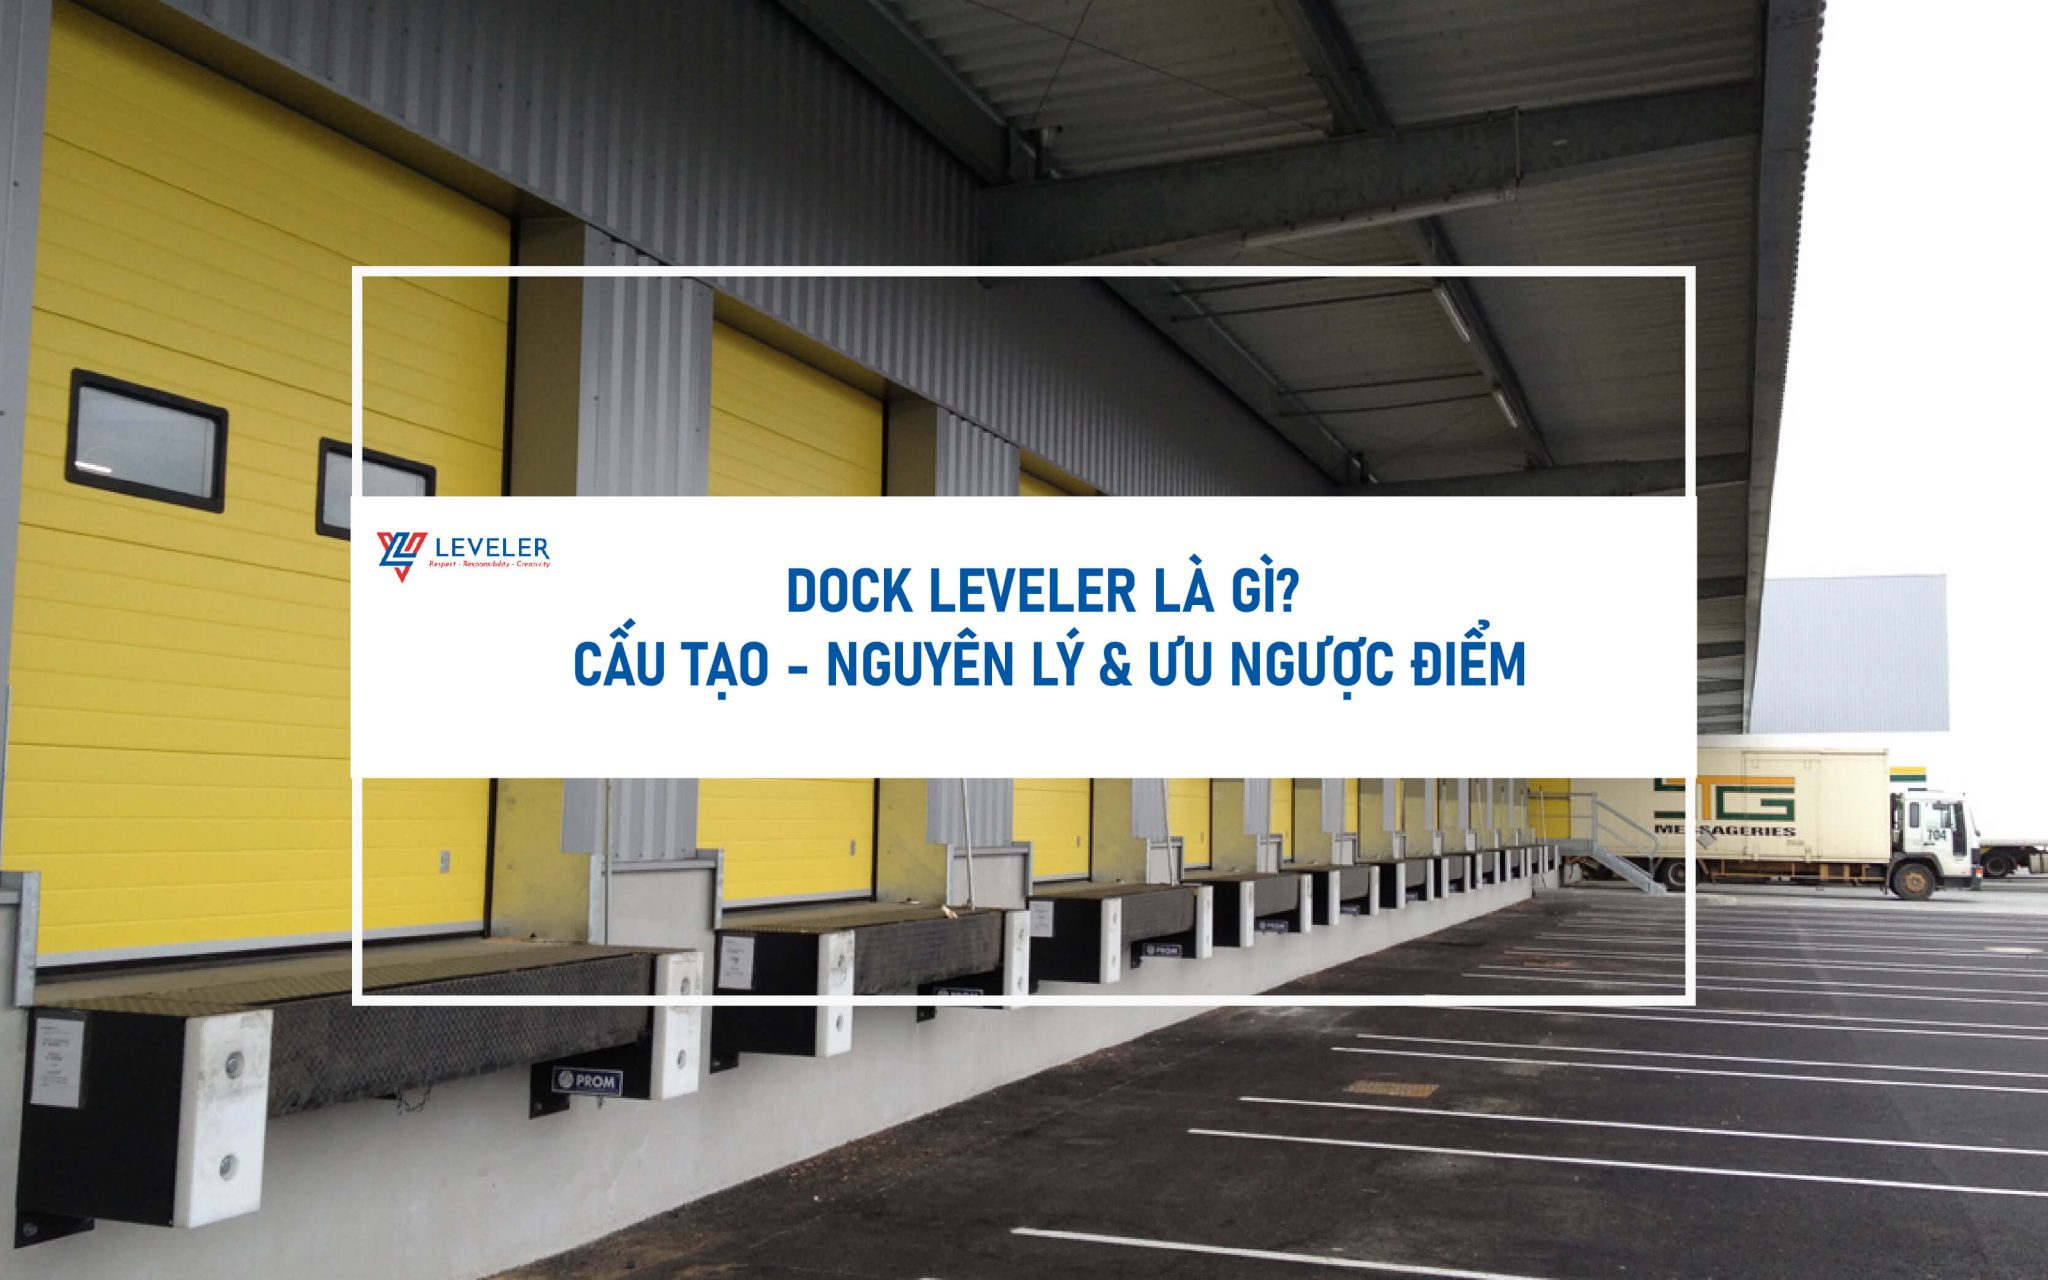 Dock Leveler là gì